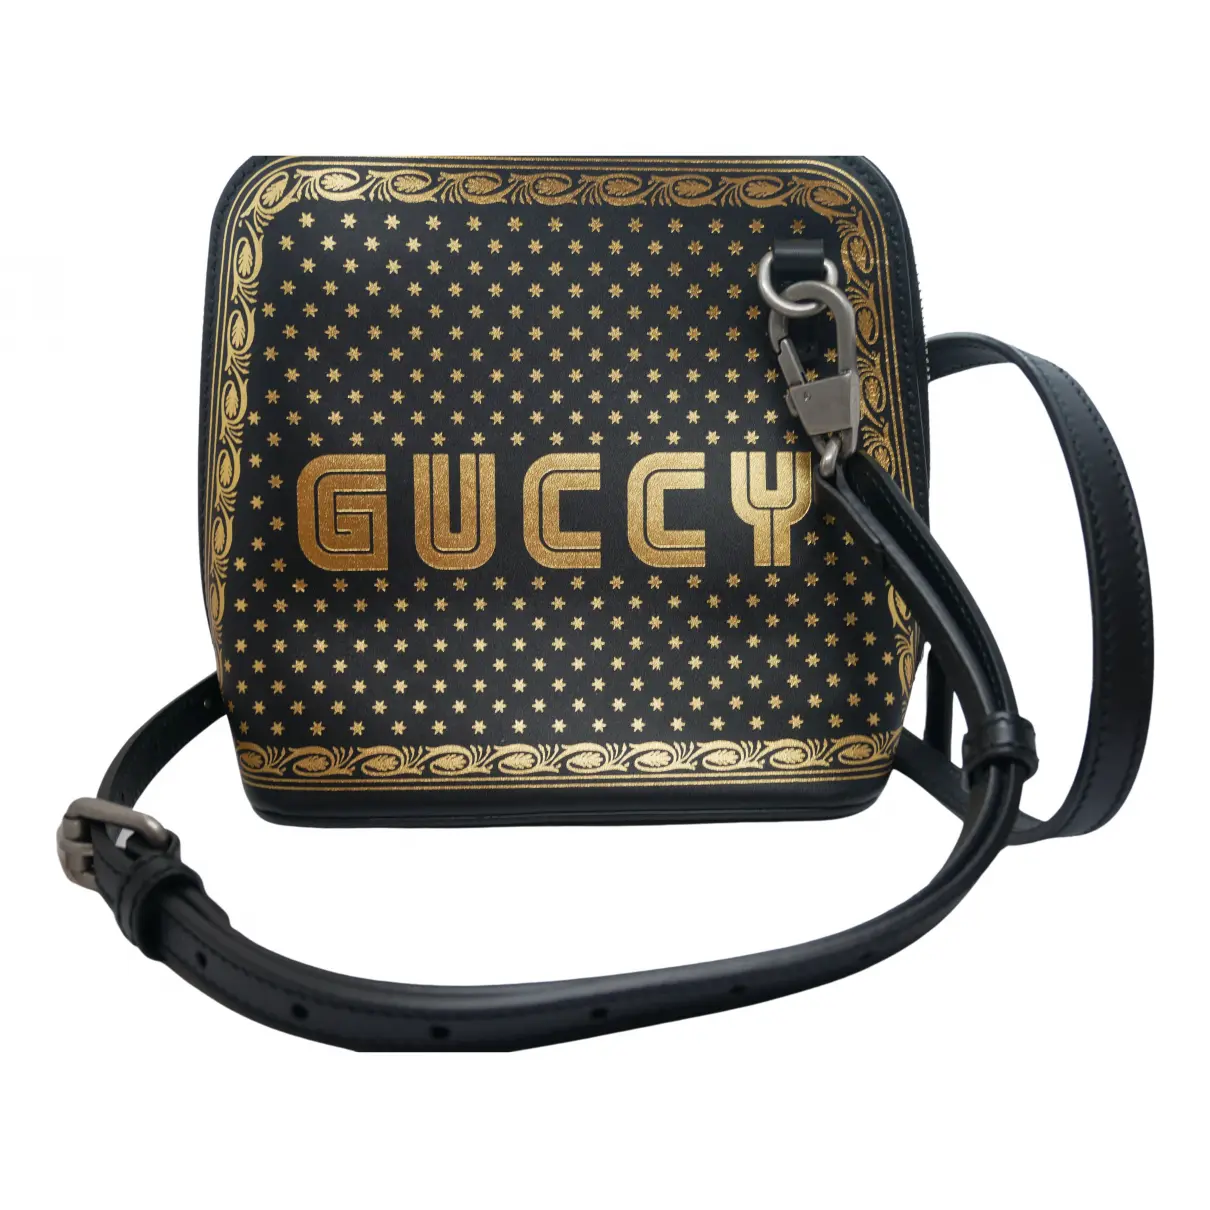 Guccy minibag leather crossbody bag Gucci